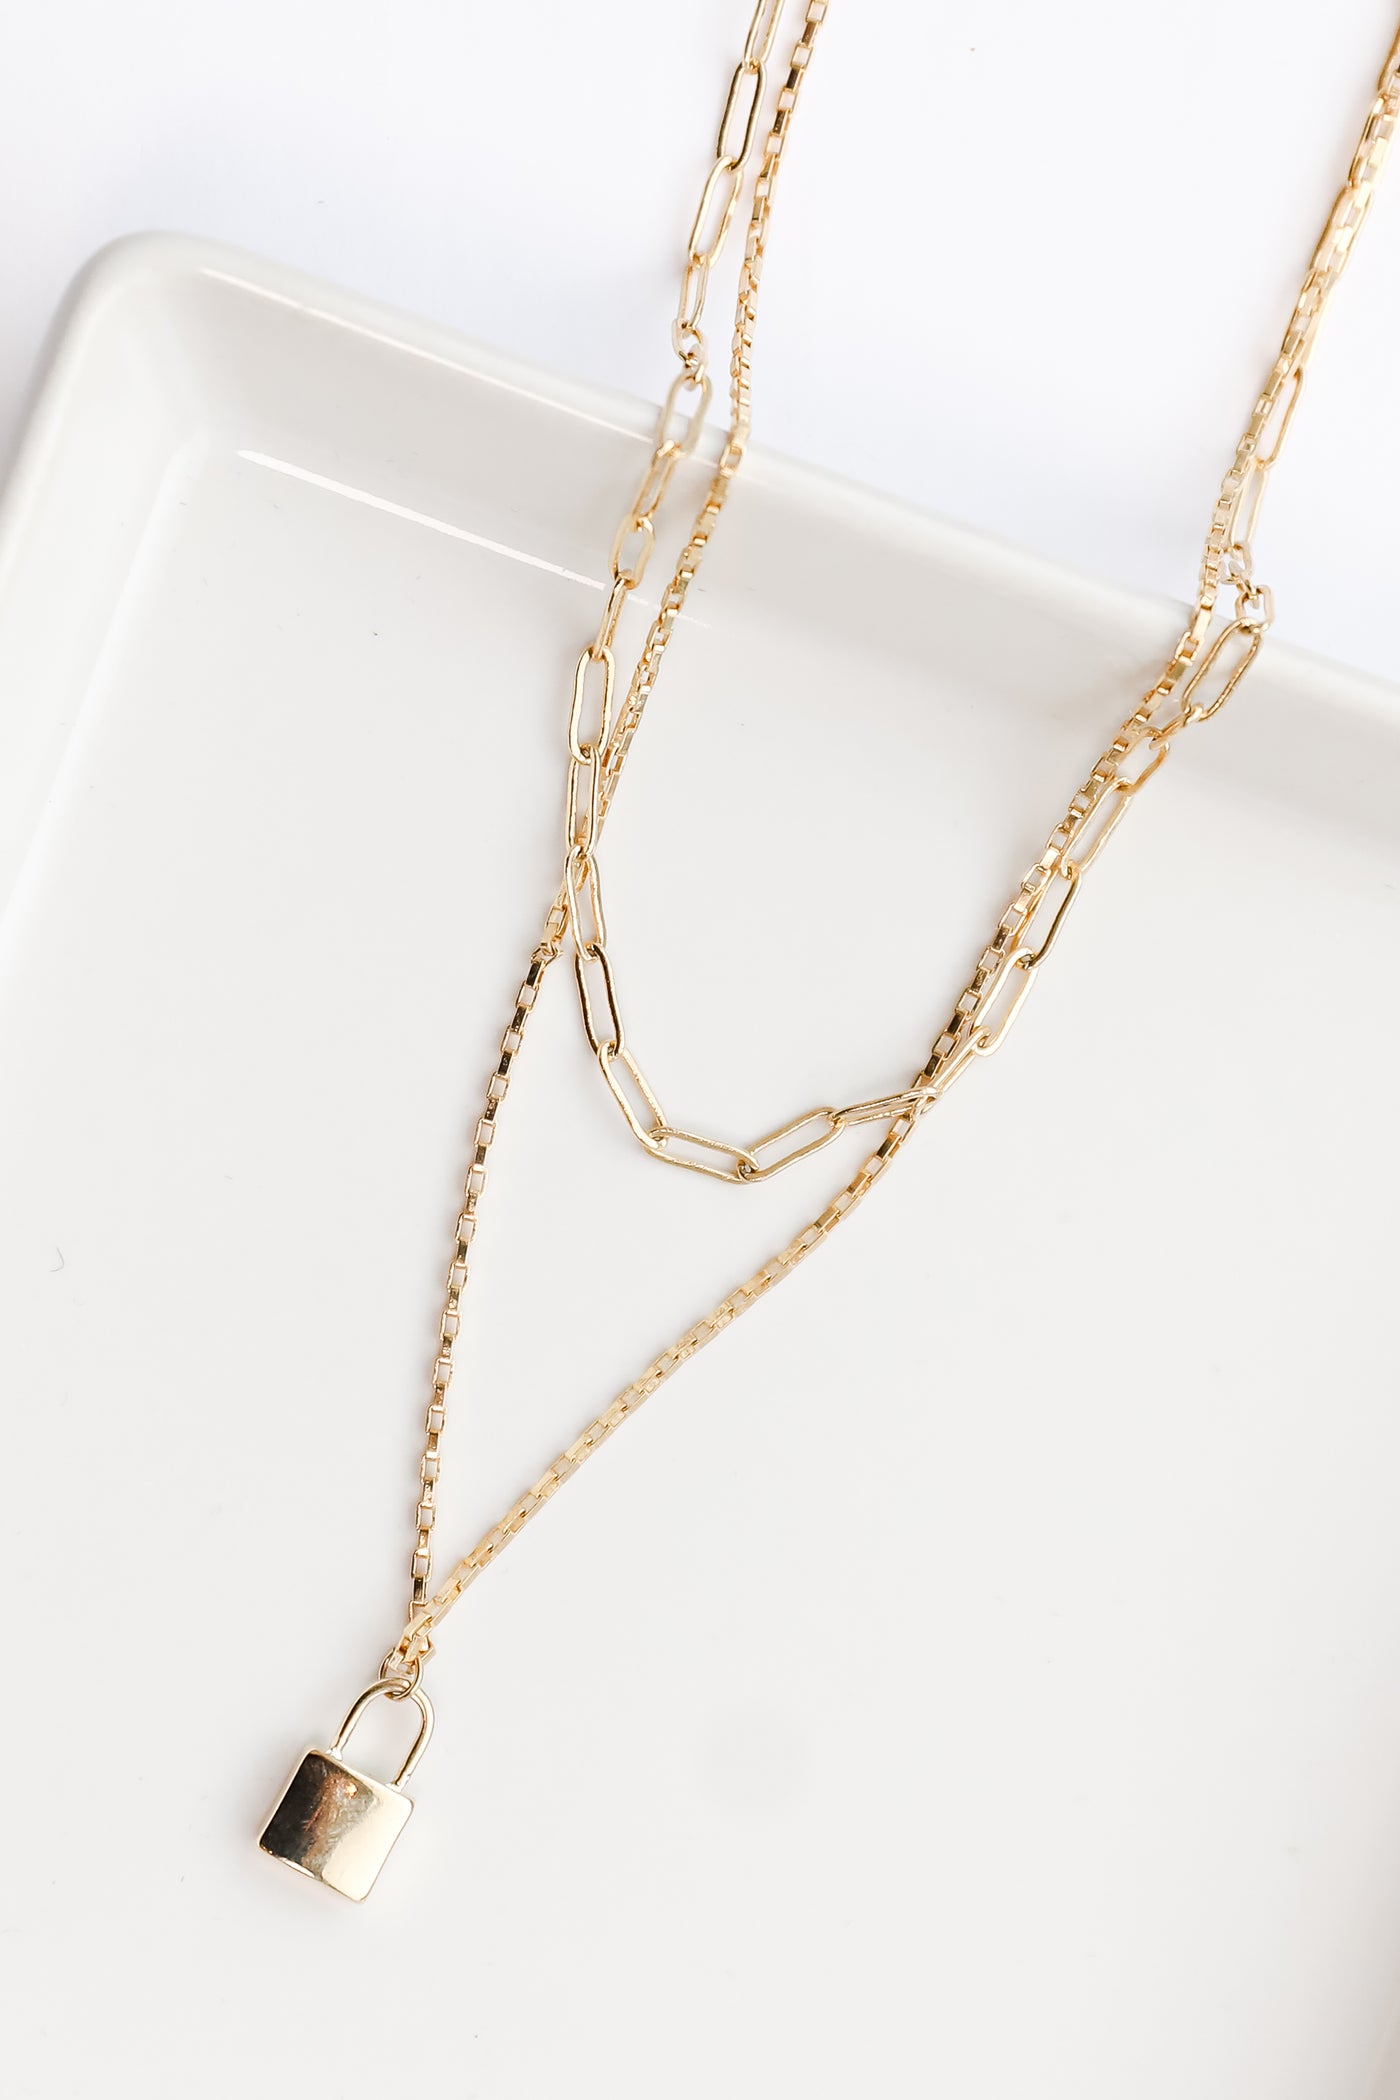 Gold Padlock Layered Necklace flat lay